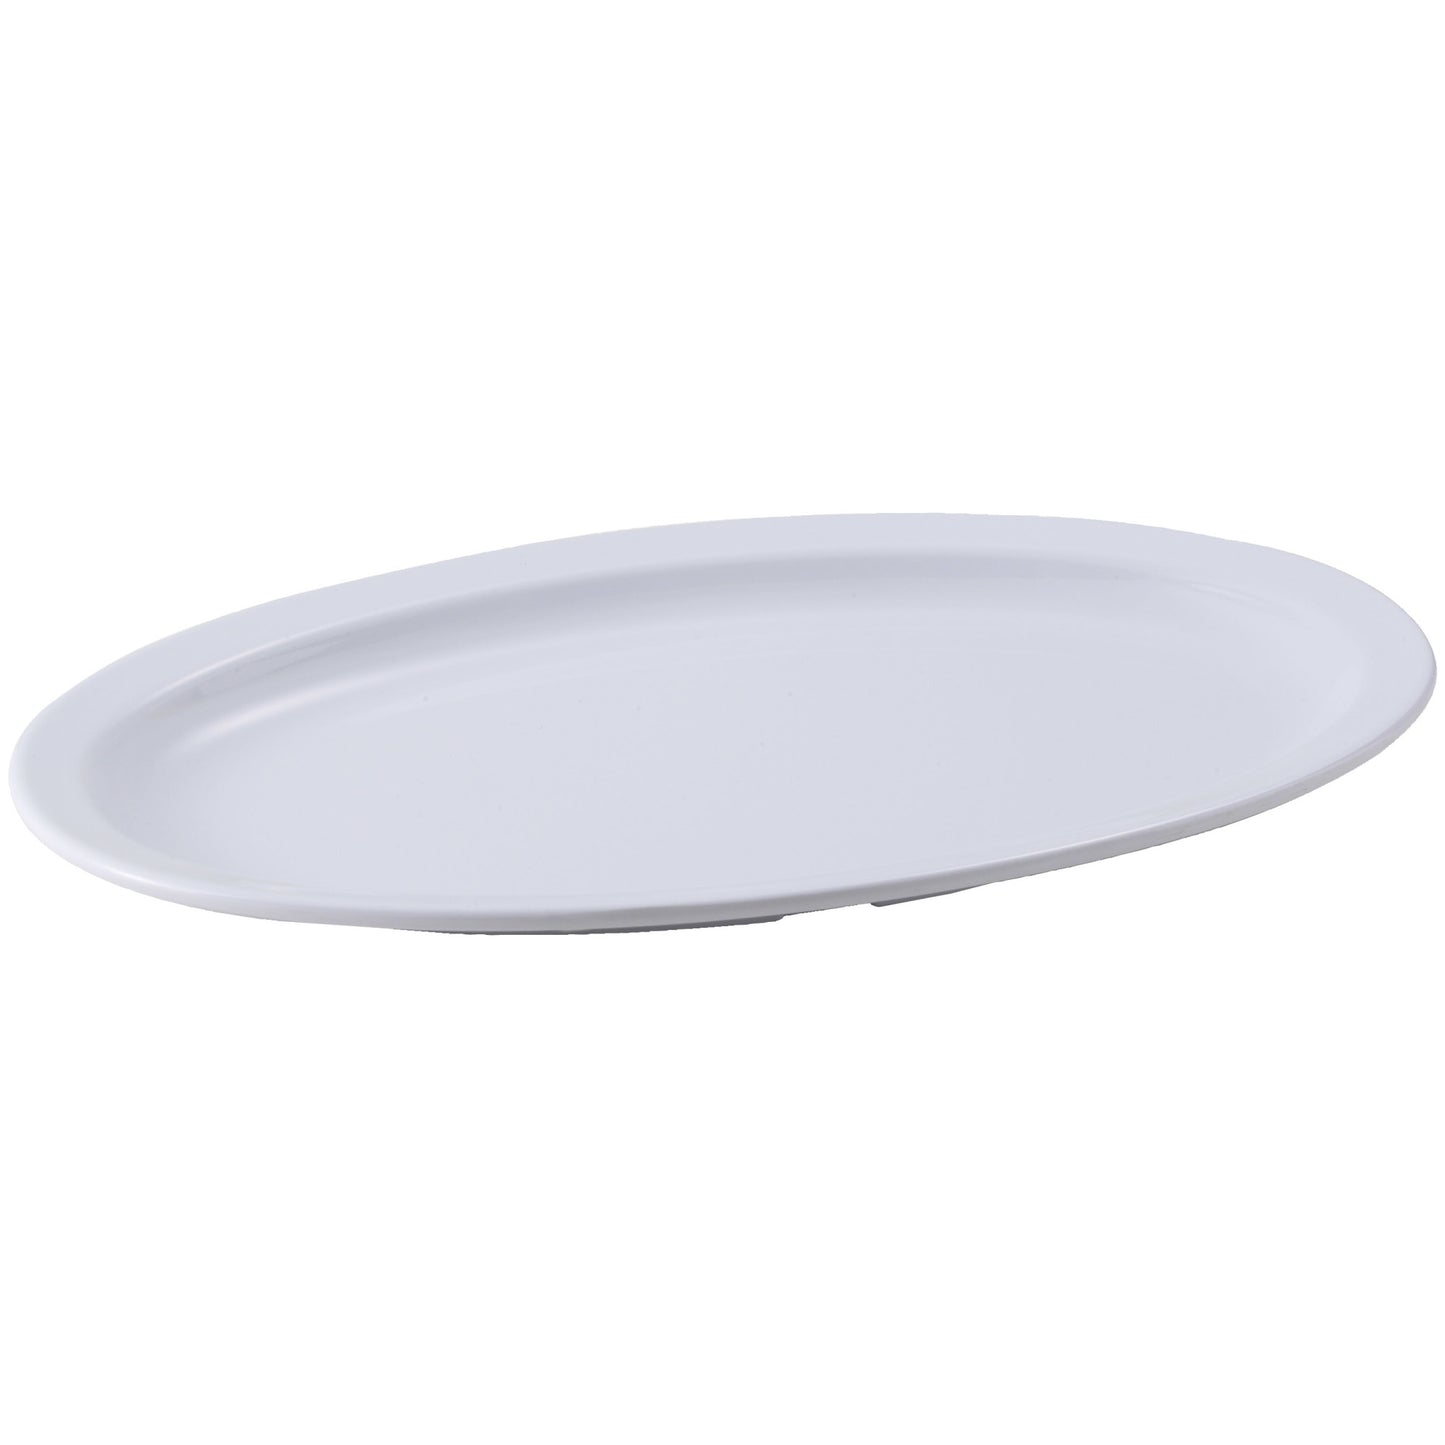 MMPO-139W - Melamine 13-1/4" x 9-1/2" Oval Platter - White